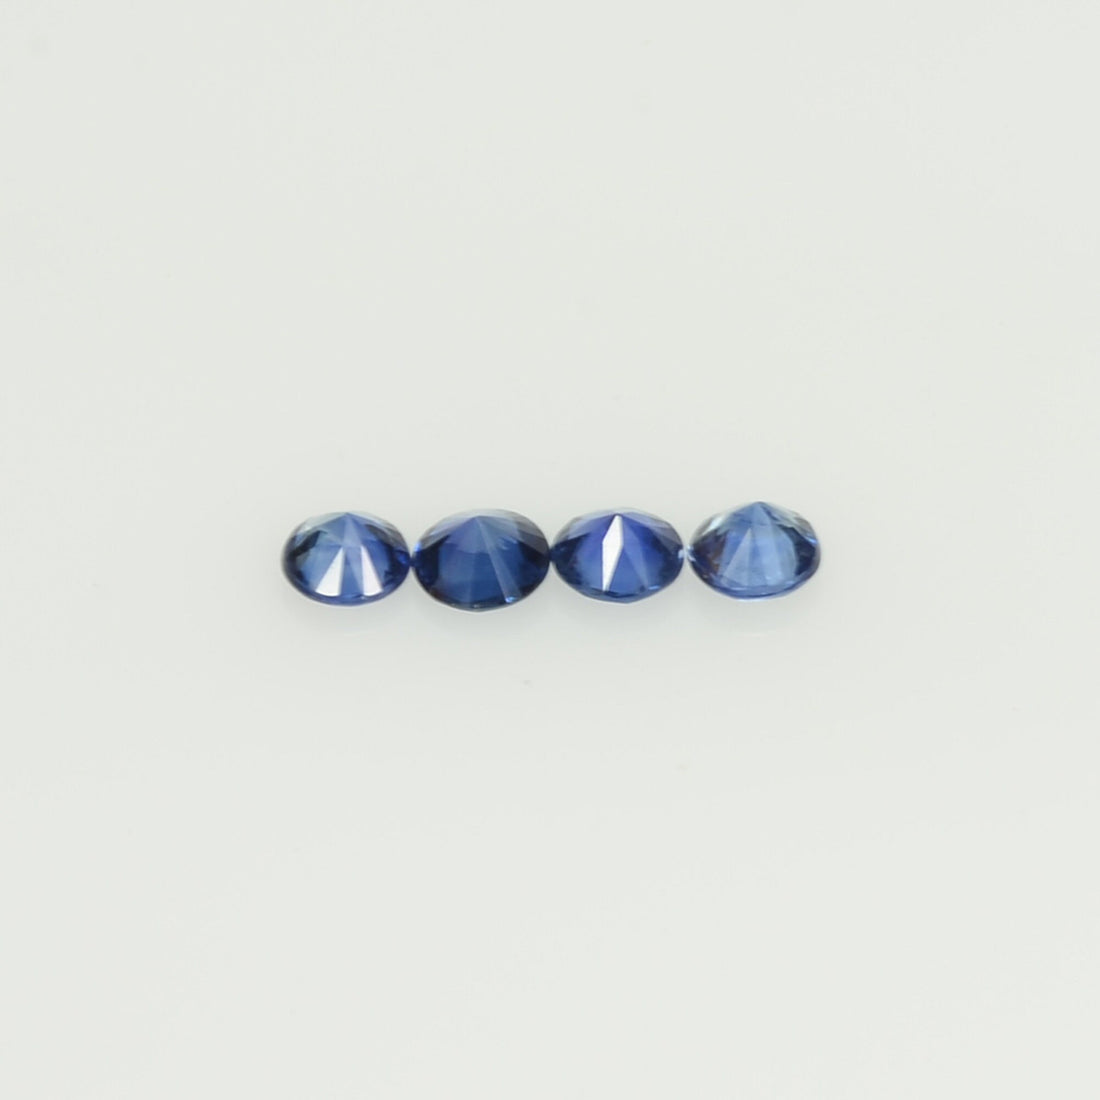 2.5 mm Natural BlueSapphire Loose Gemstone Round Diamond Cut Vs Quality Color